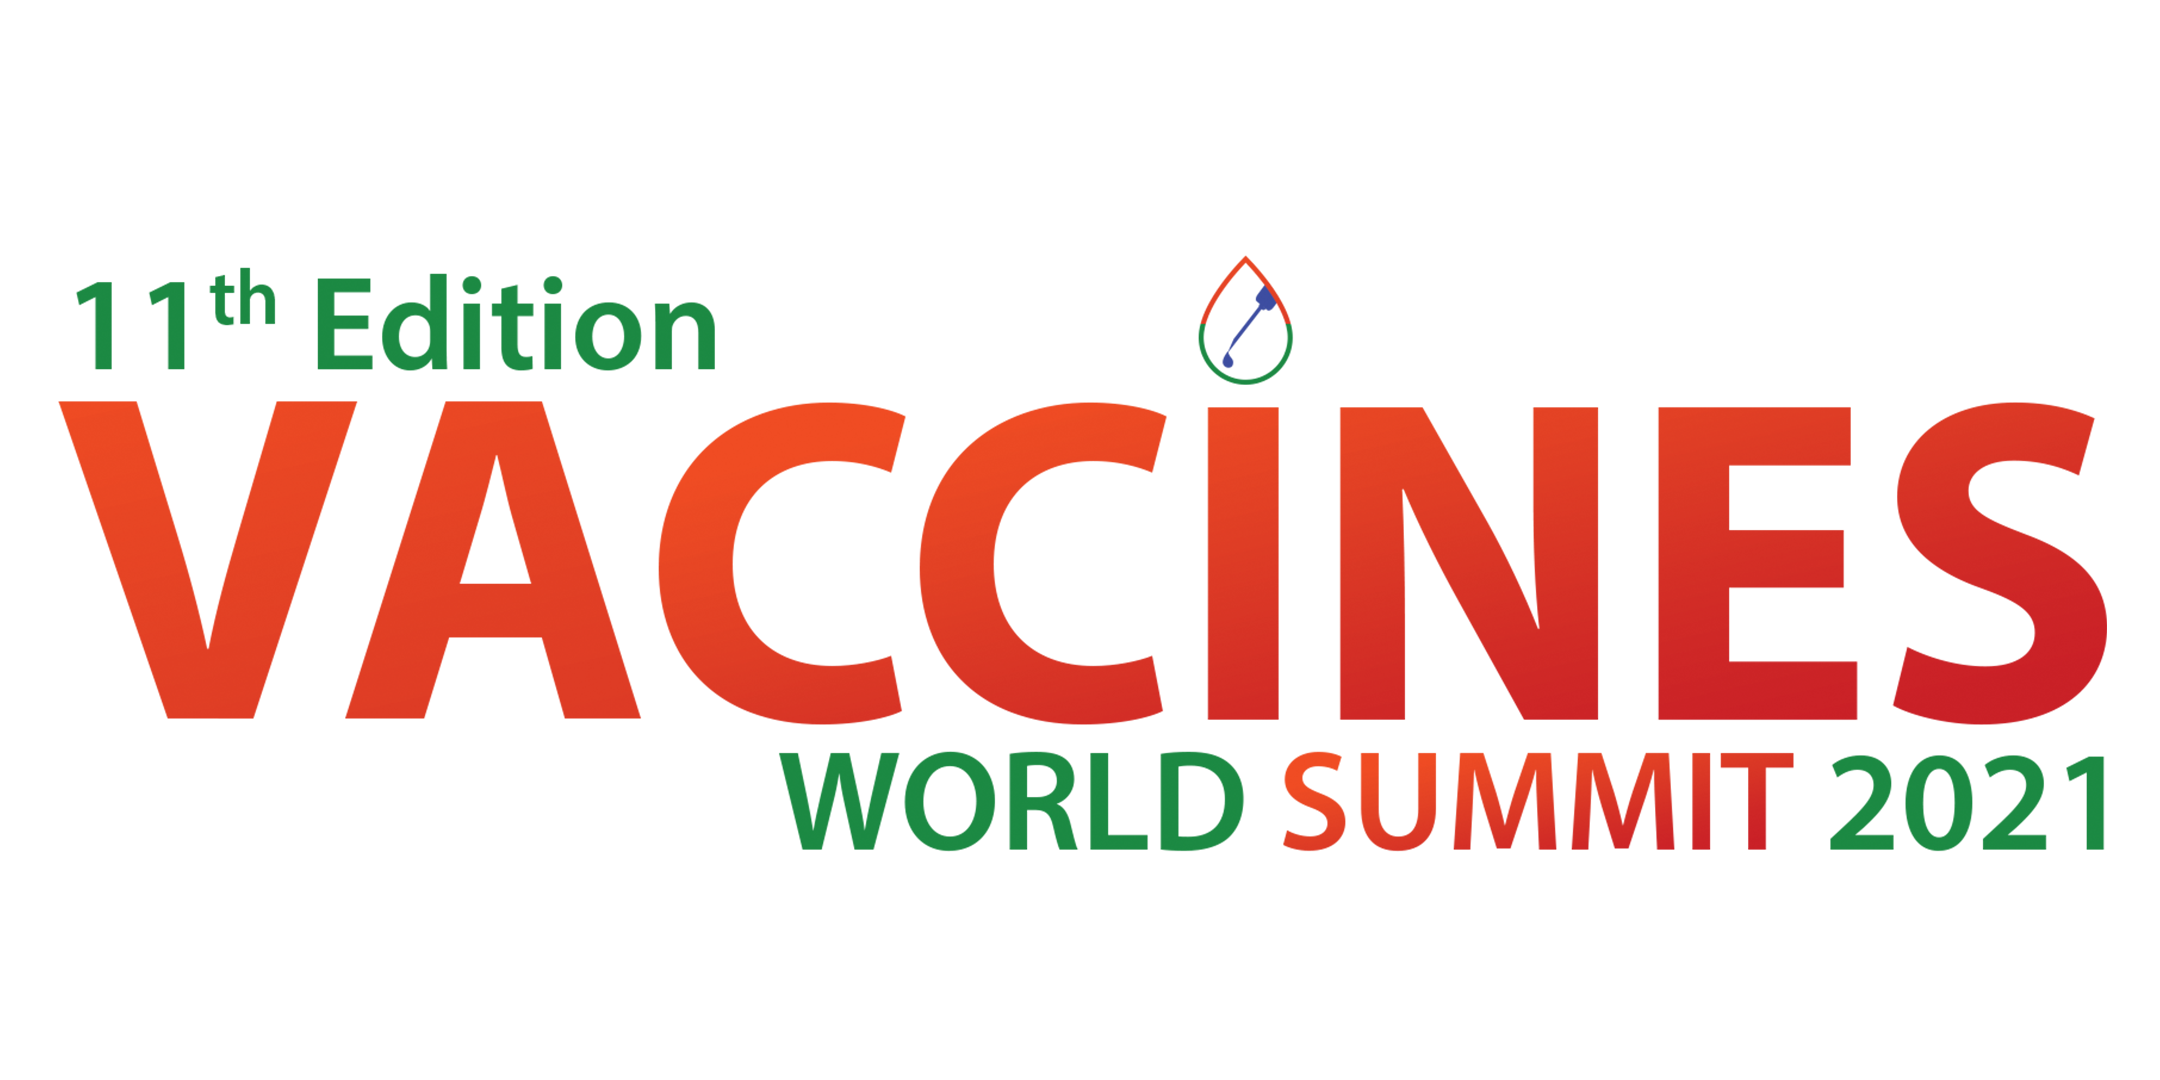 11th Annual Vaccines World Summit 2021